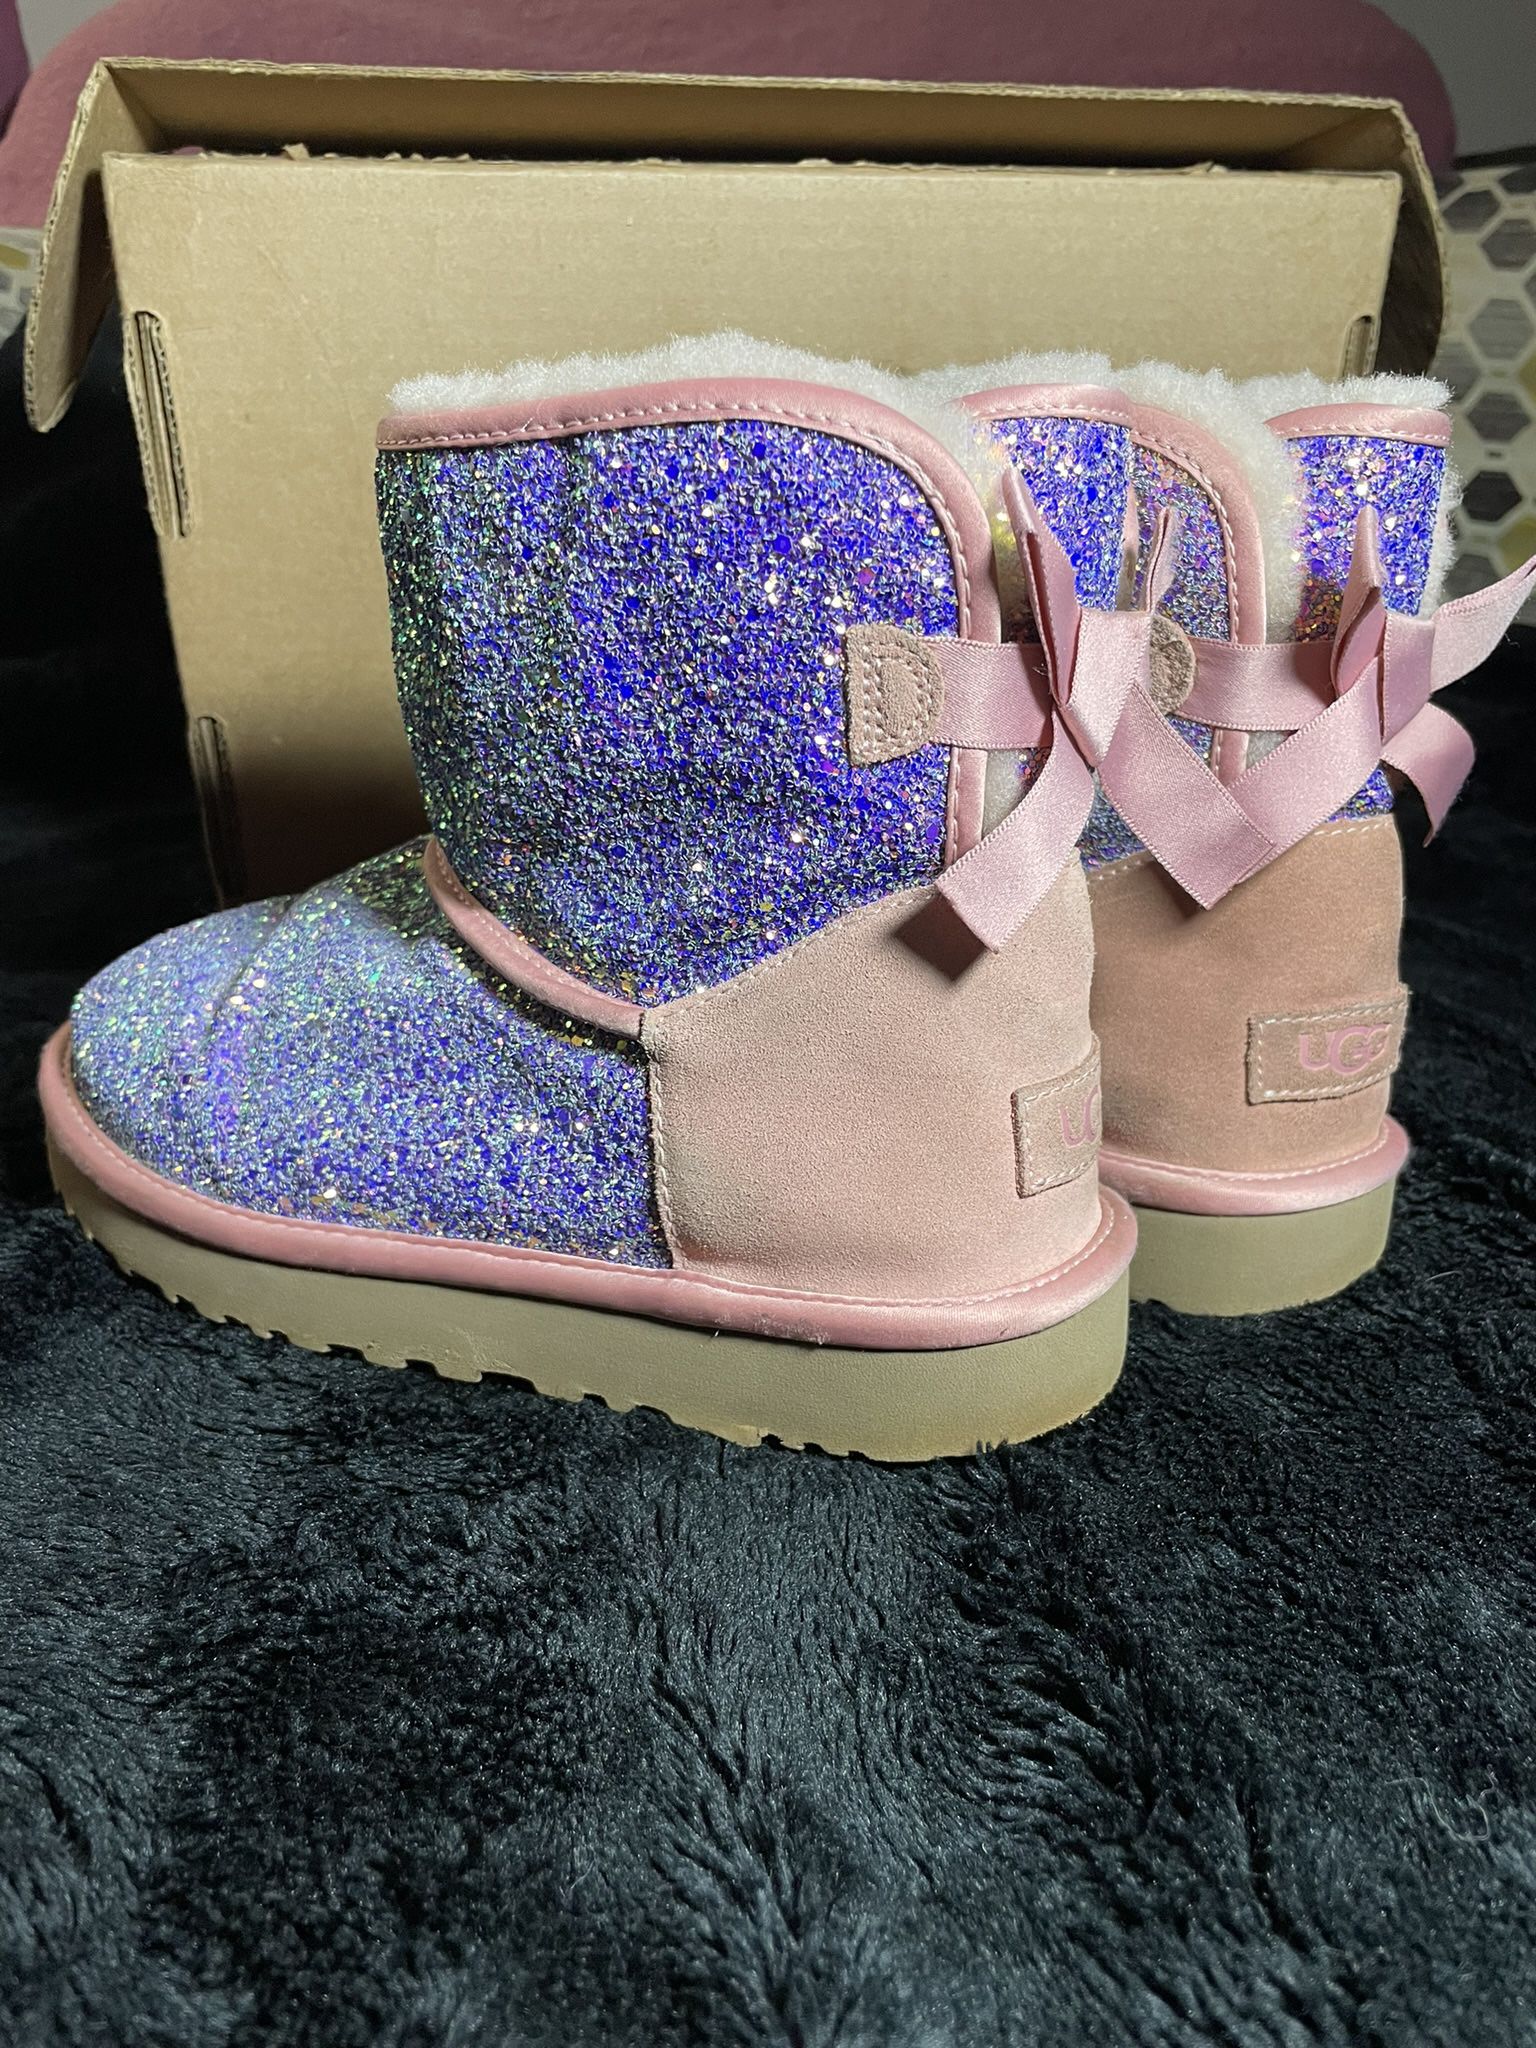 Ugg Women’s Pink/Purple Chameleon Sequined Boots 9